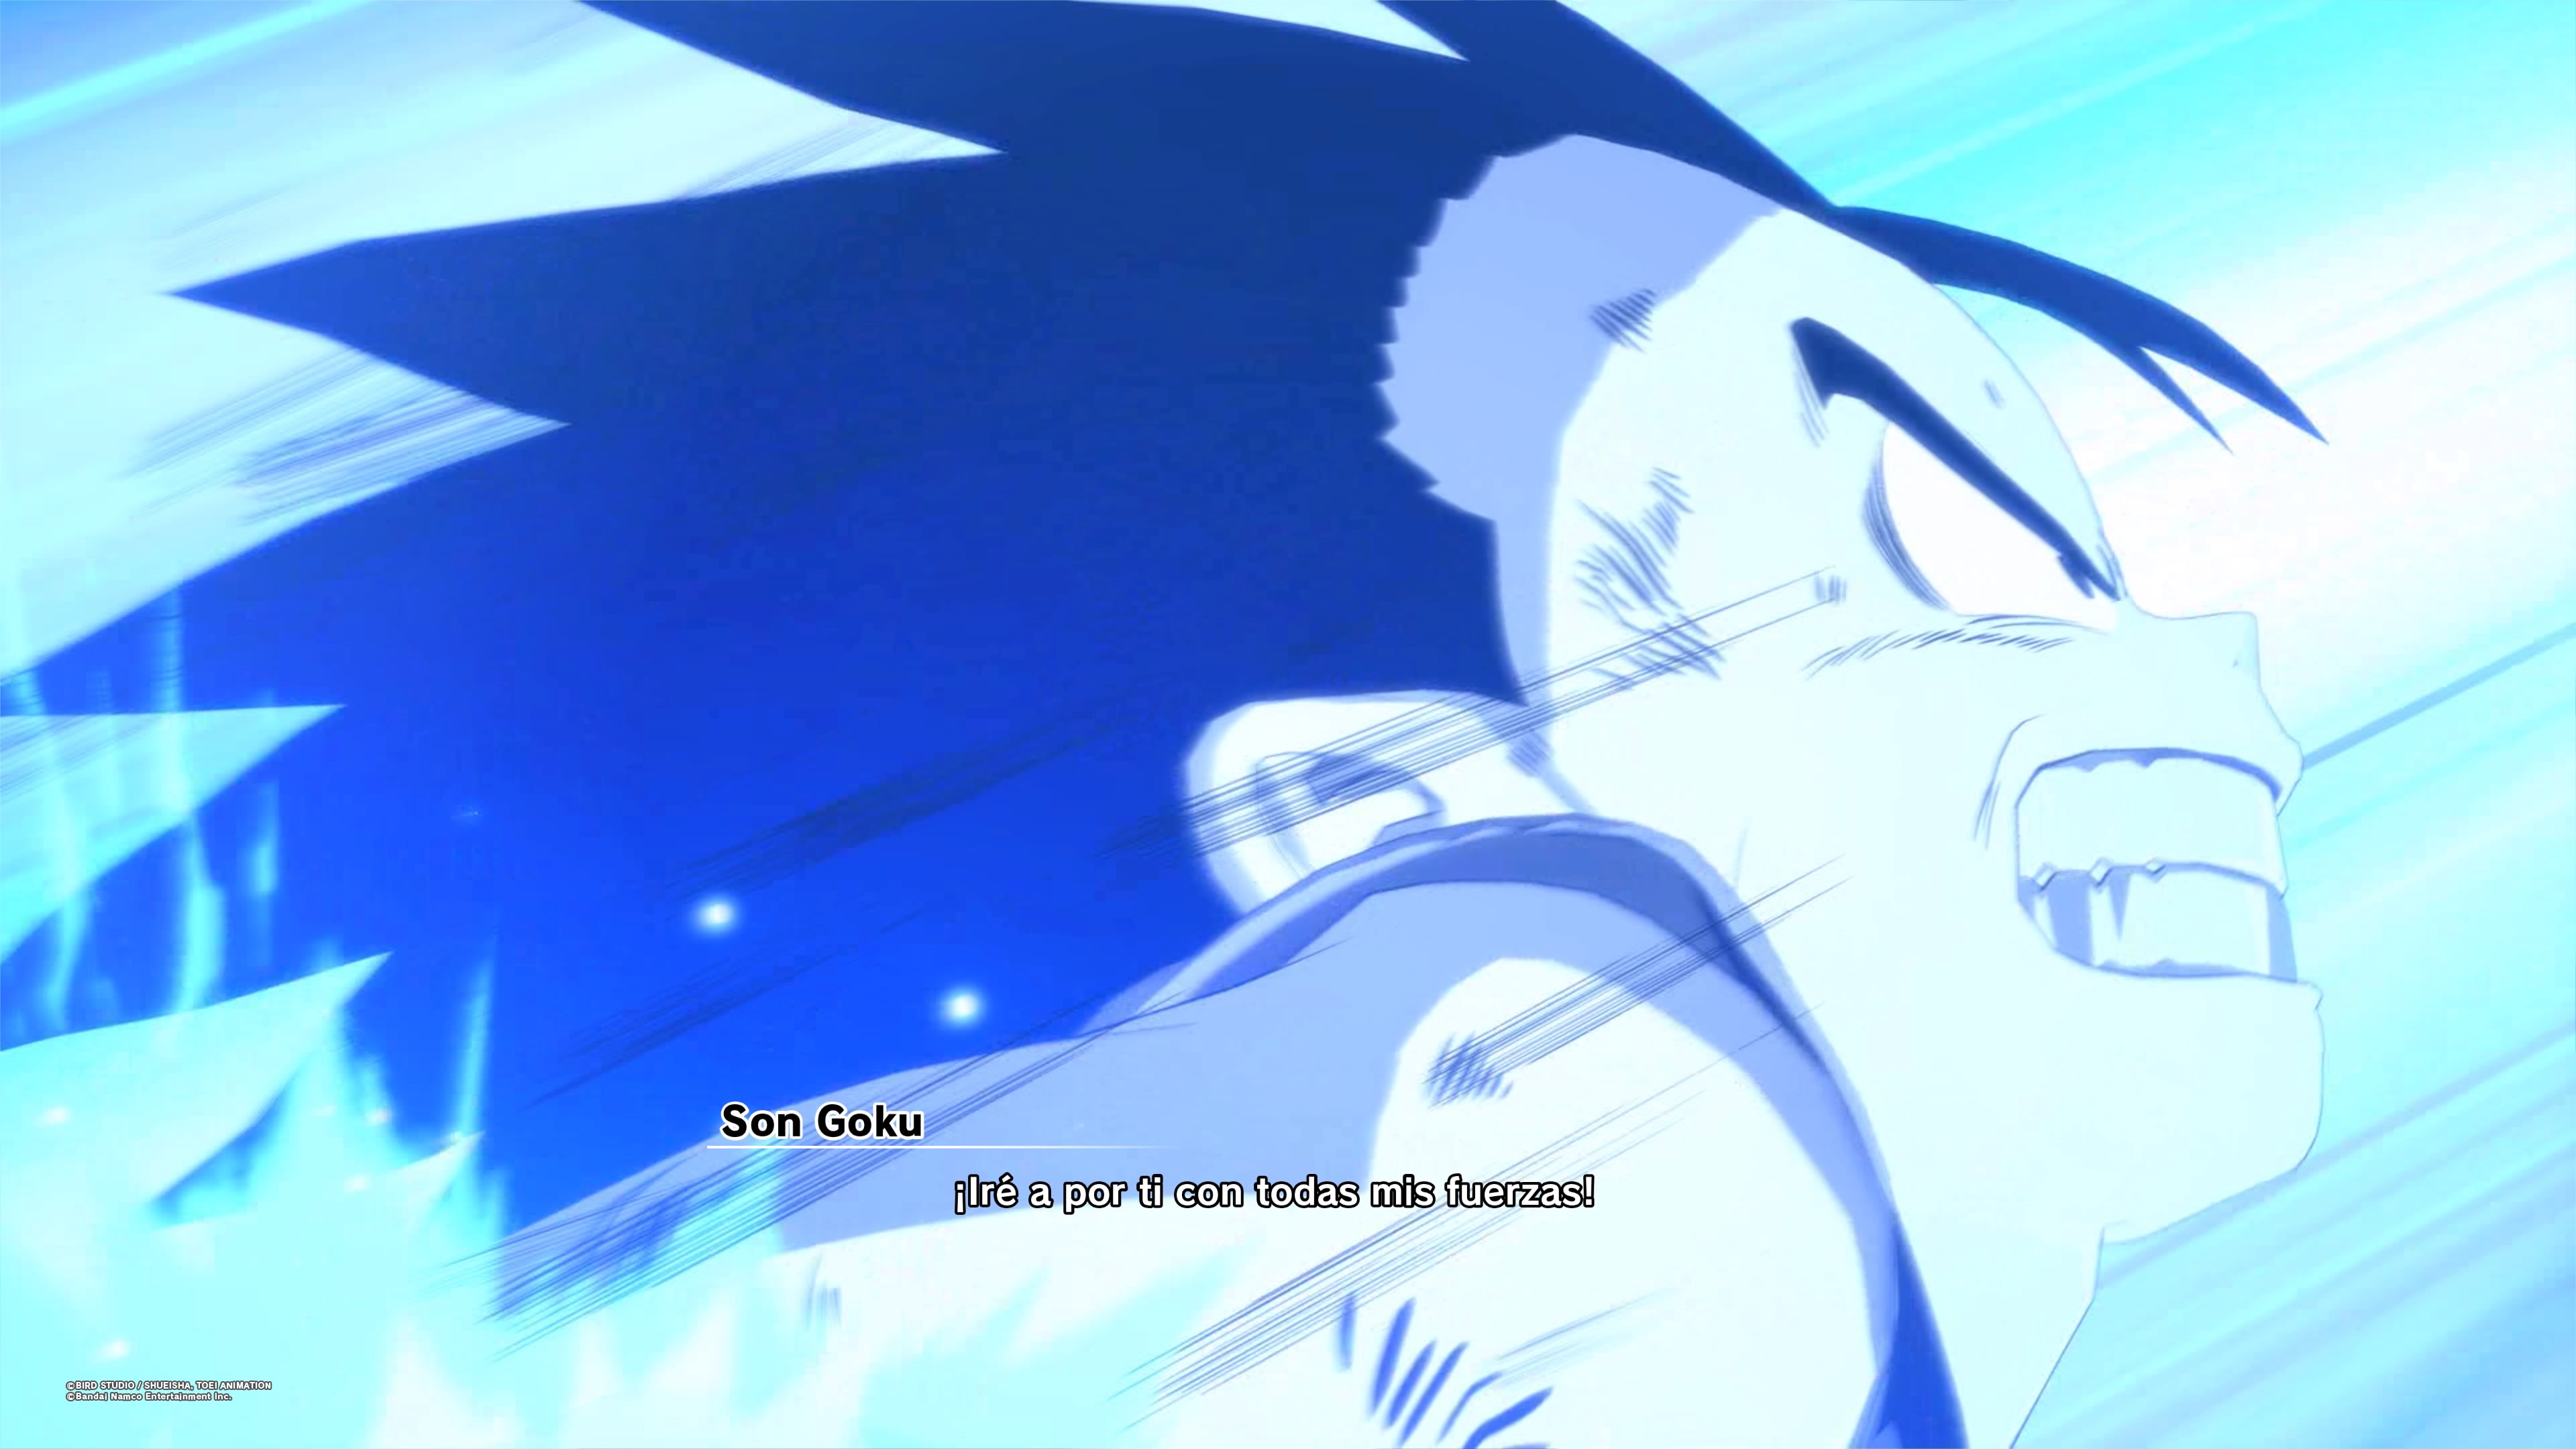 Dragon Ball Z: Kakarot  DLC trará Goku e Vegeta na forma Super Saiyan Blue